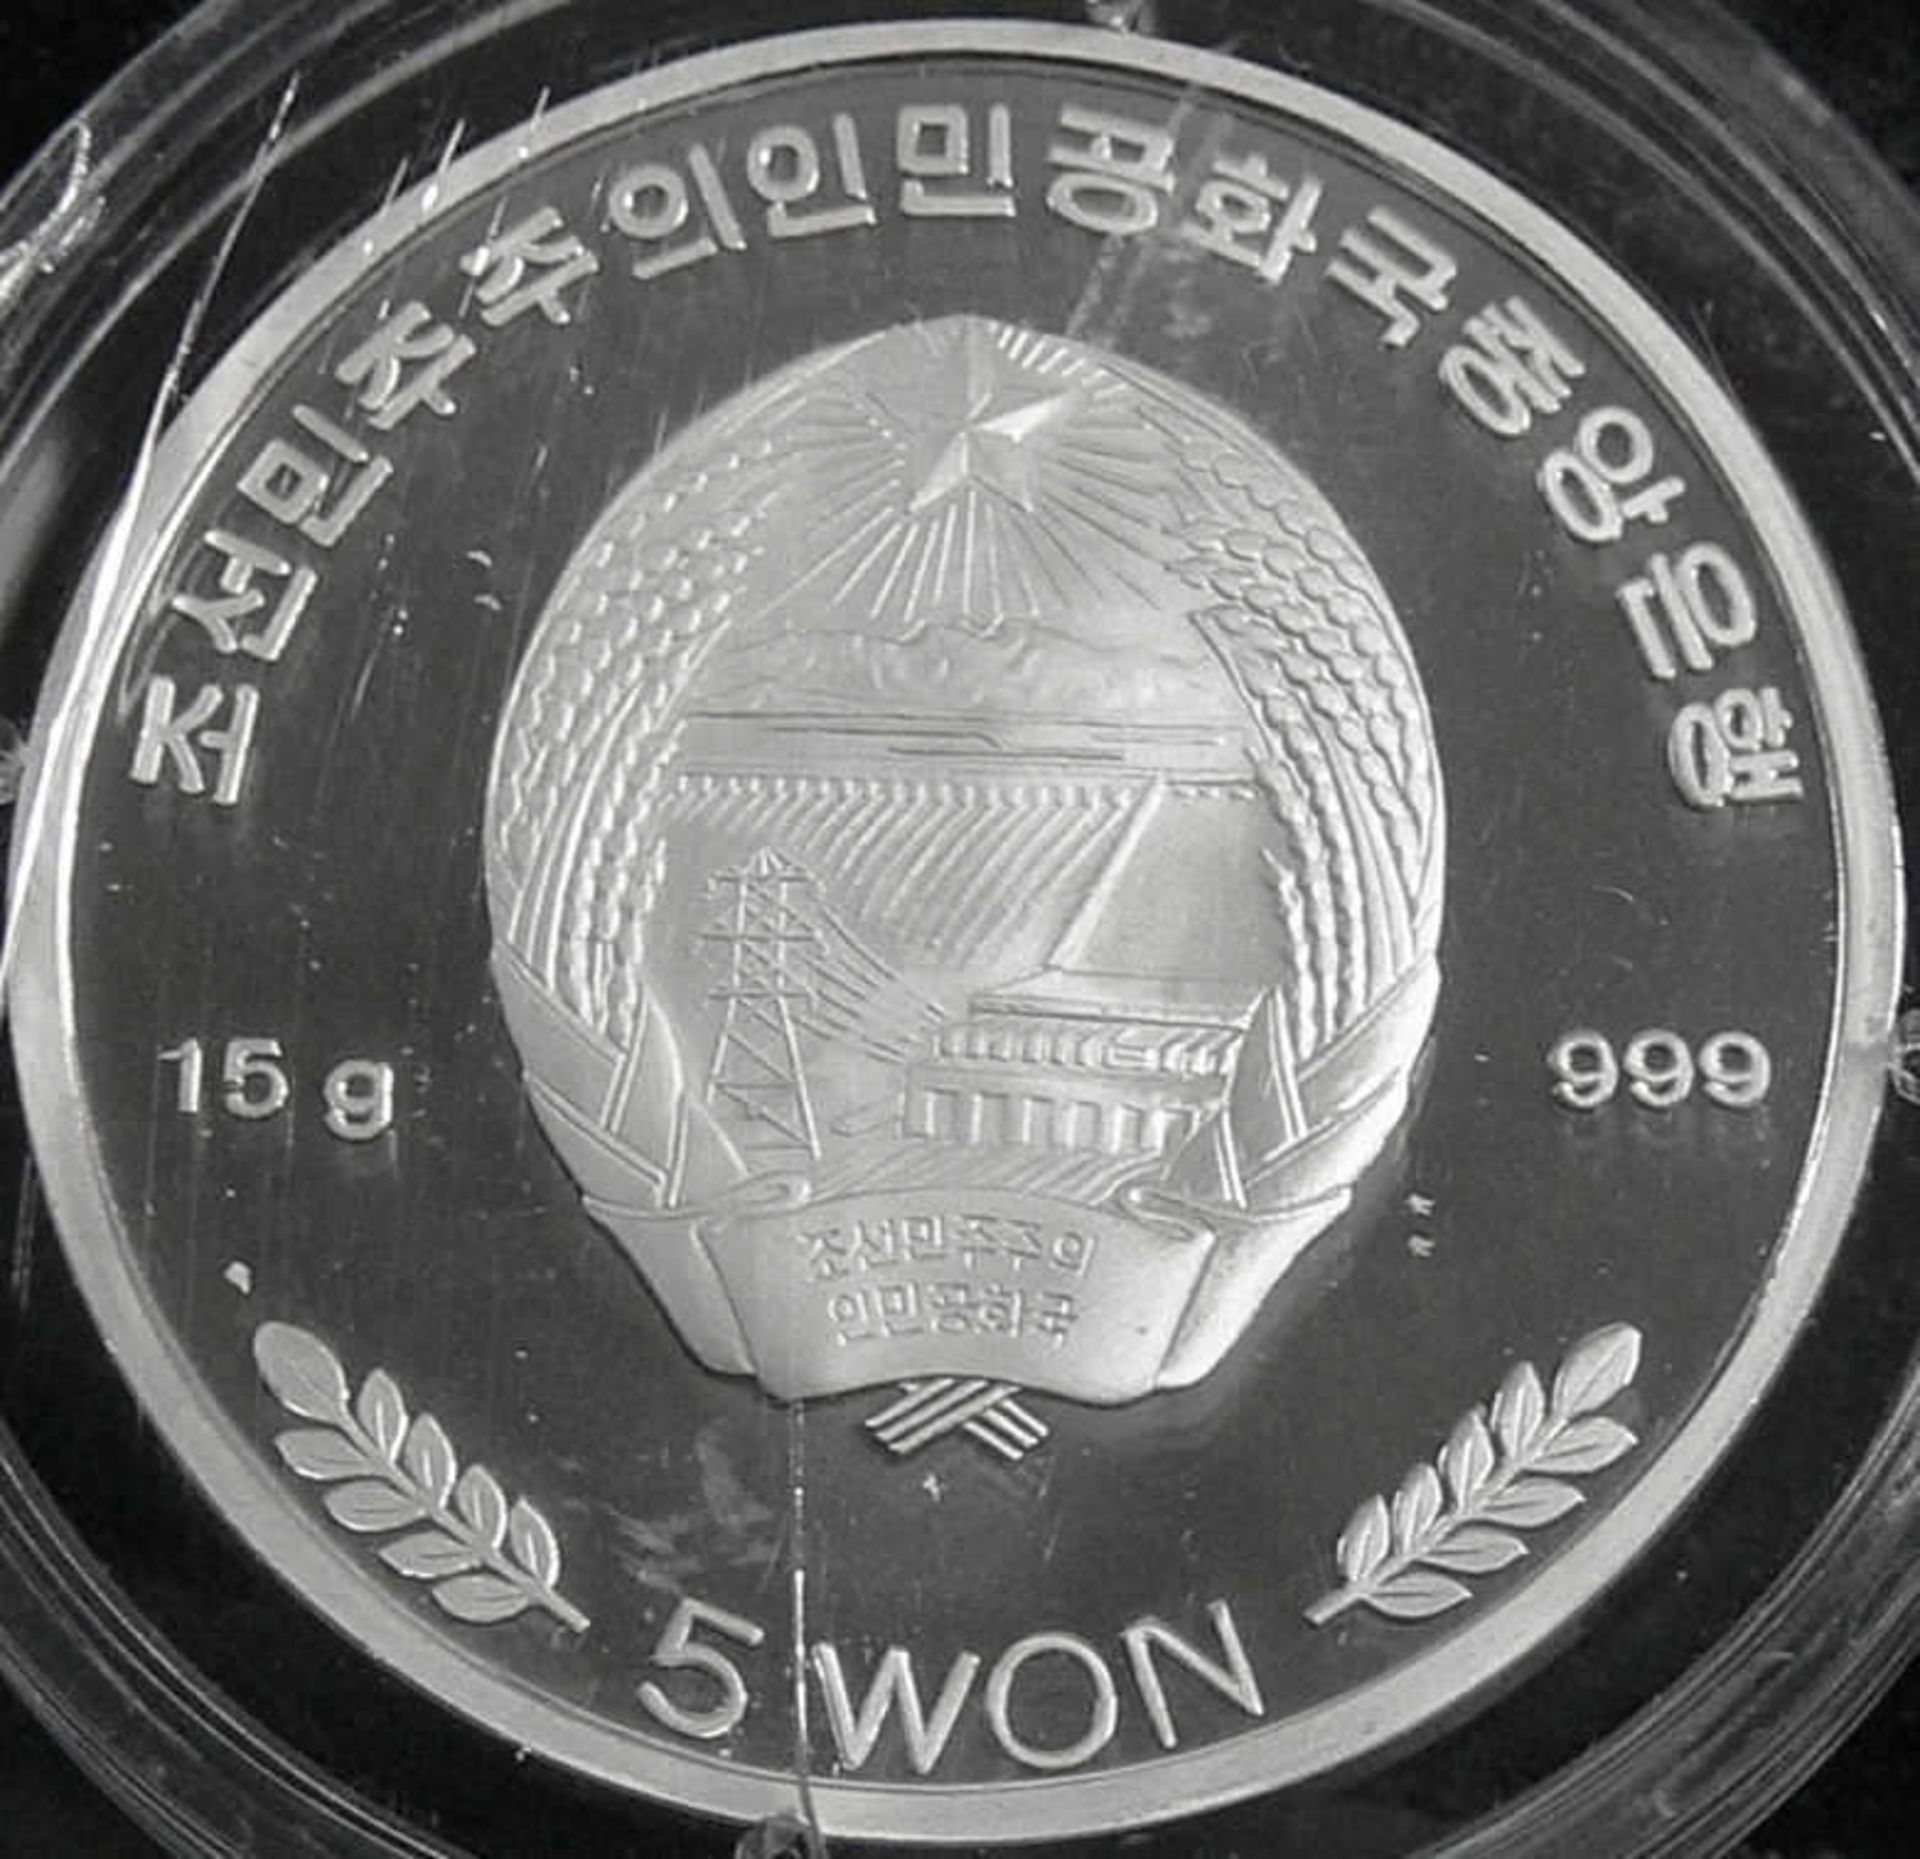 Nord - Korea 2000, 5 Won - Silbermünze "Mountbatten SR-N4". Silber 999, Gewicht: 15 g. In Kapsel. - Image 2 of 2